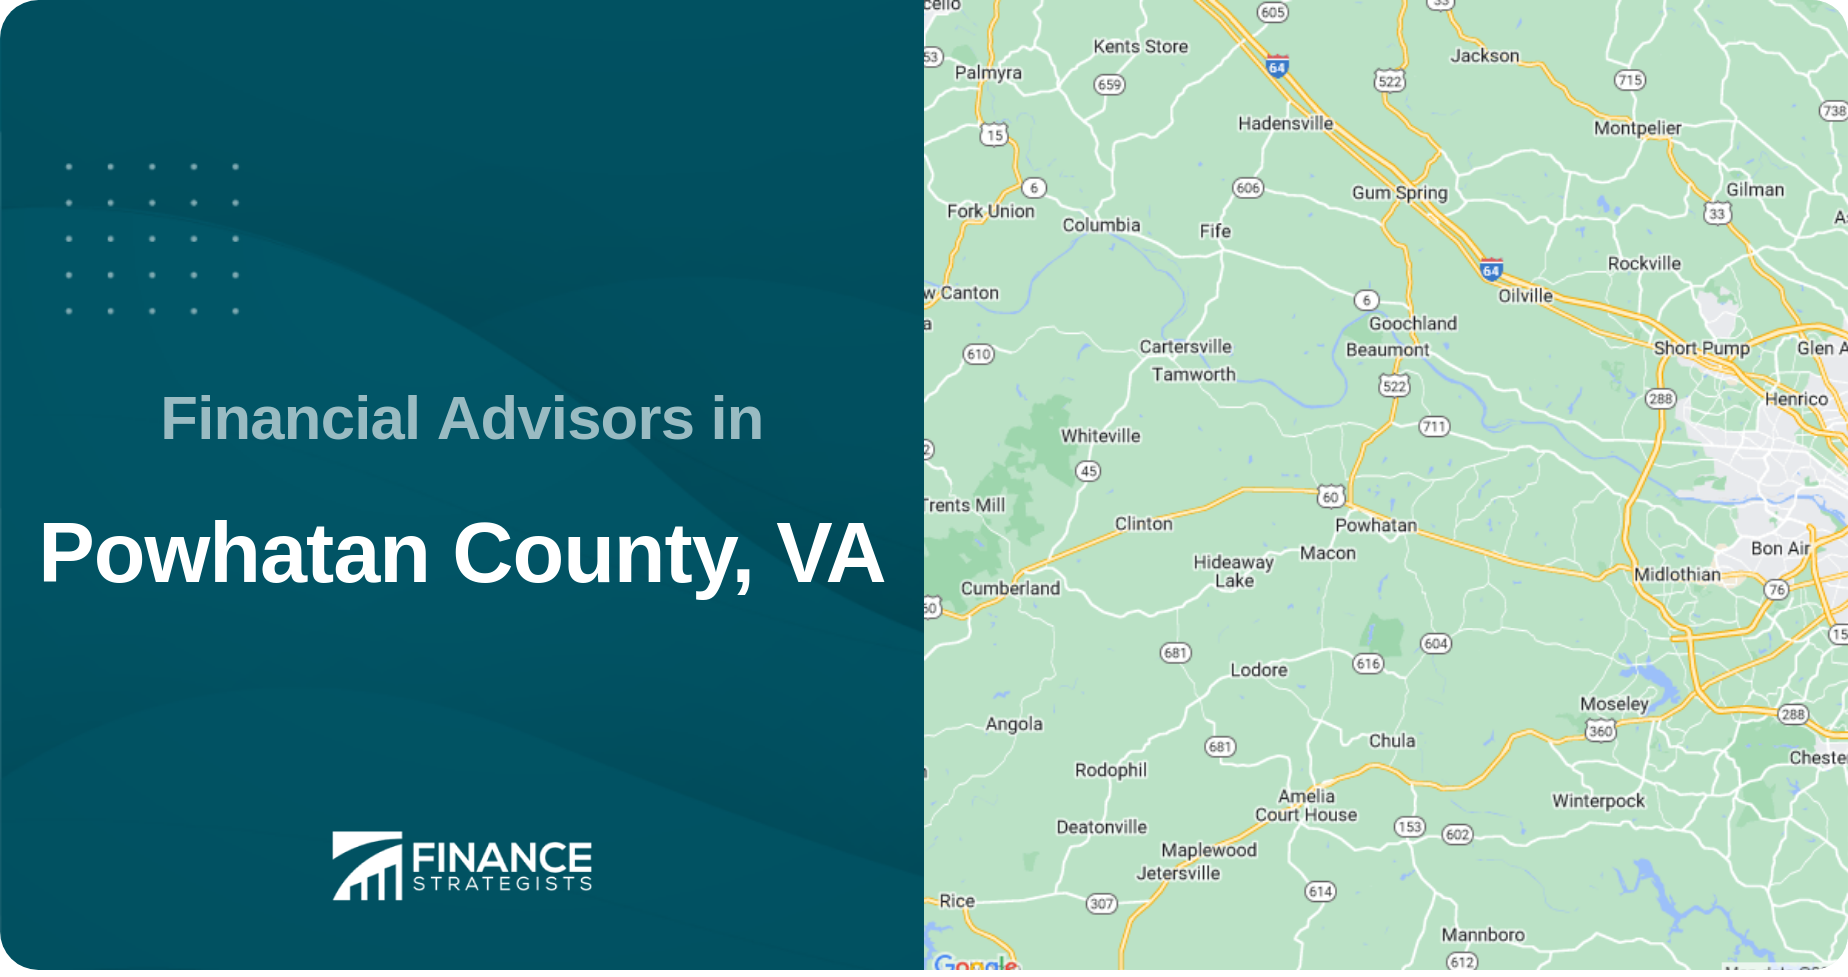 Financial Advisors in Powhatan County, VA